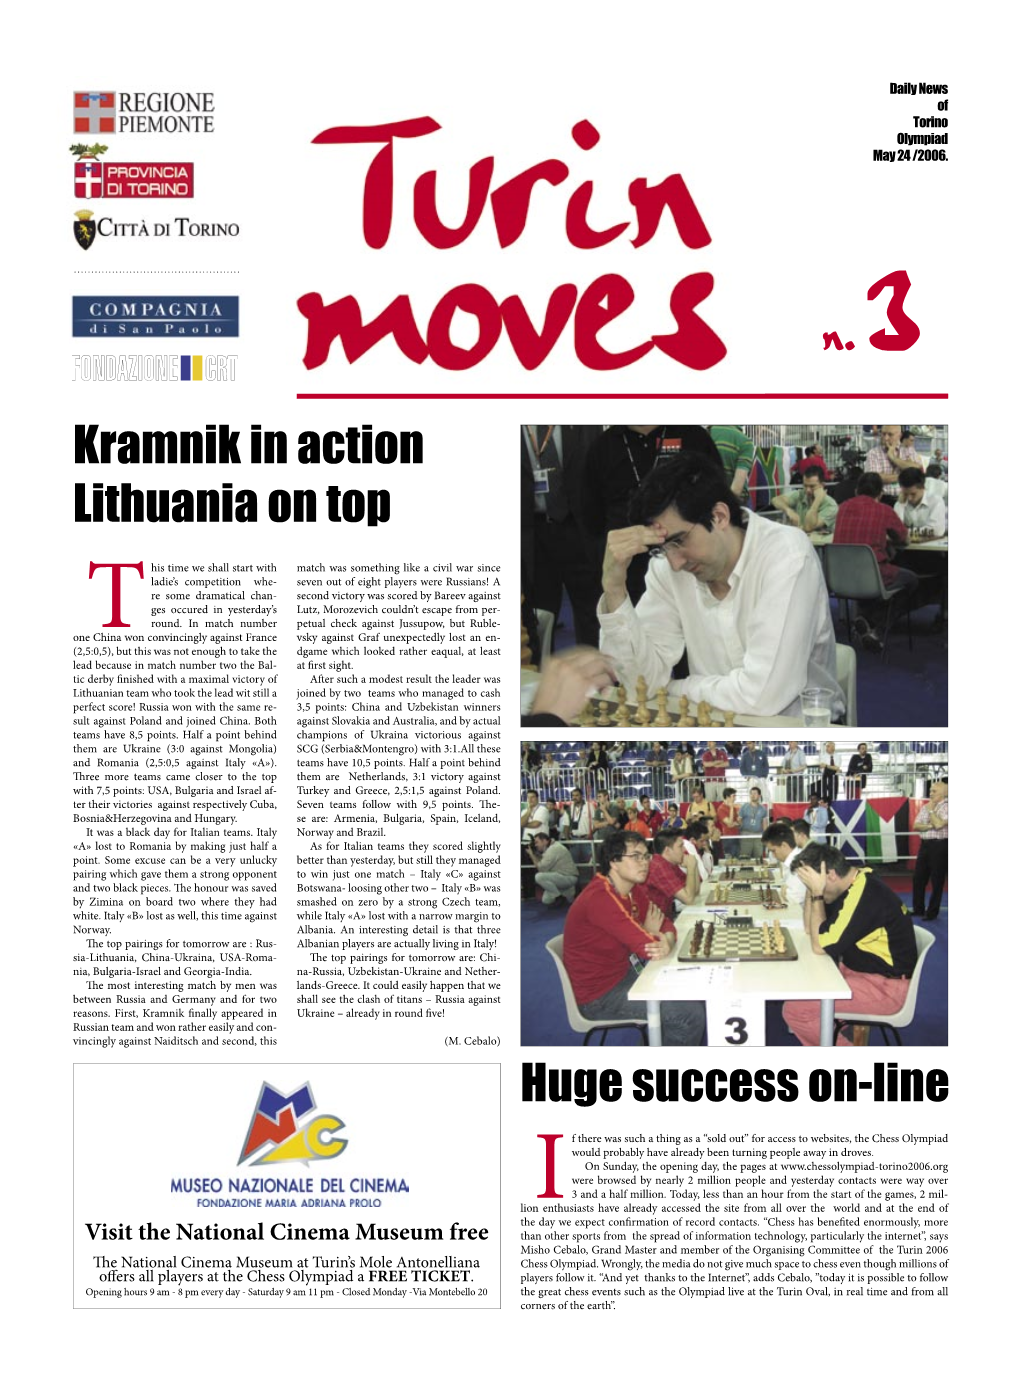 Kramnik in Action Lithuania on Top Huge Success On-Line